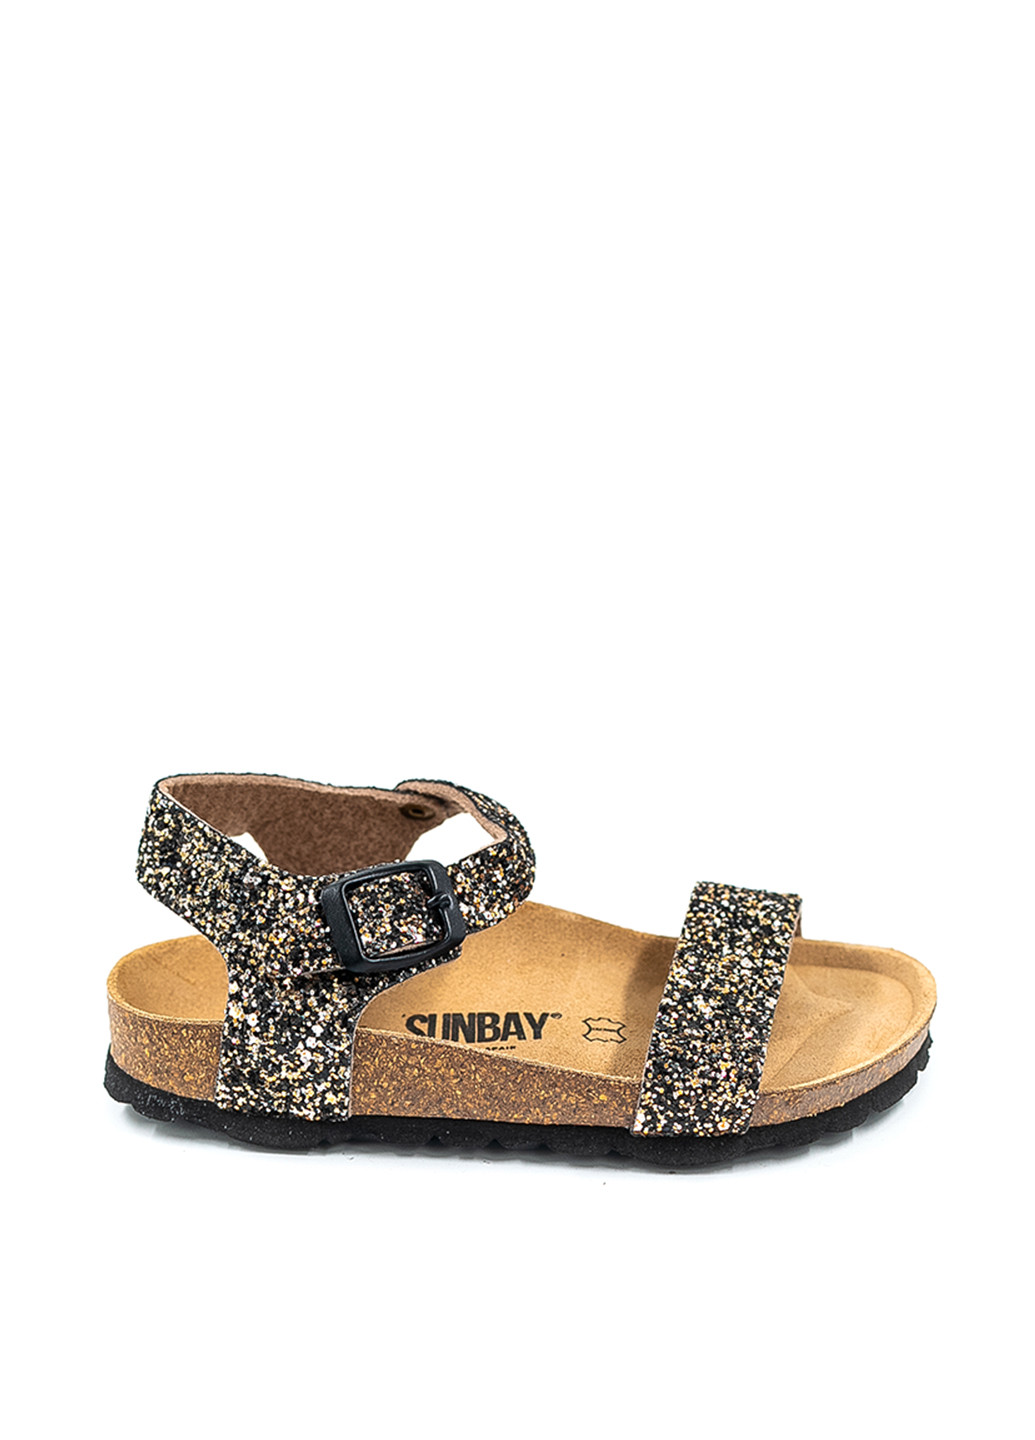 Темно-золотистые кэжуал сандалии Sunbay с ремешком